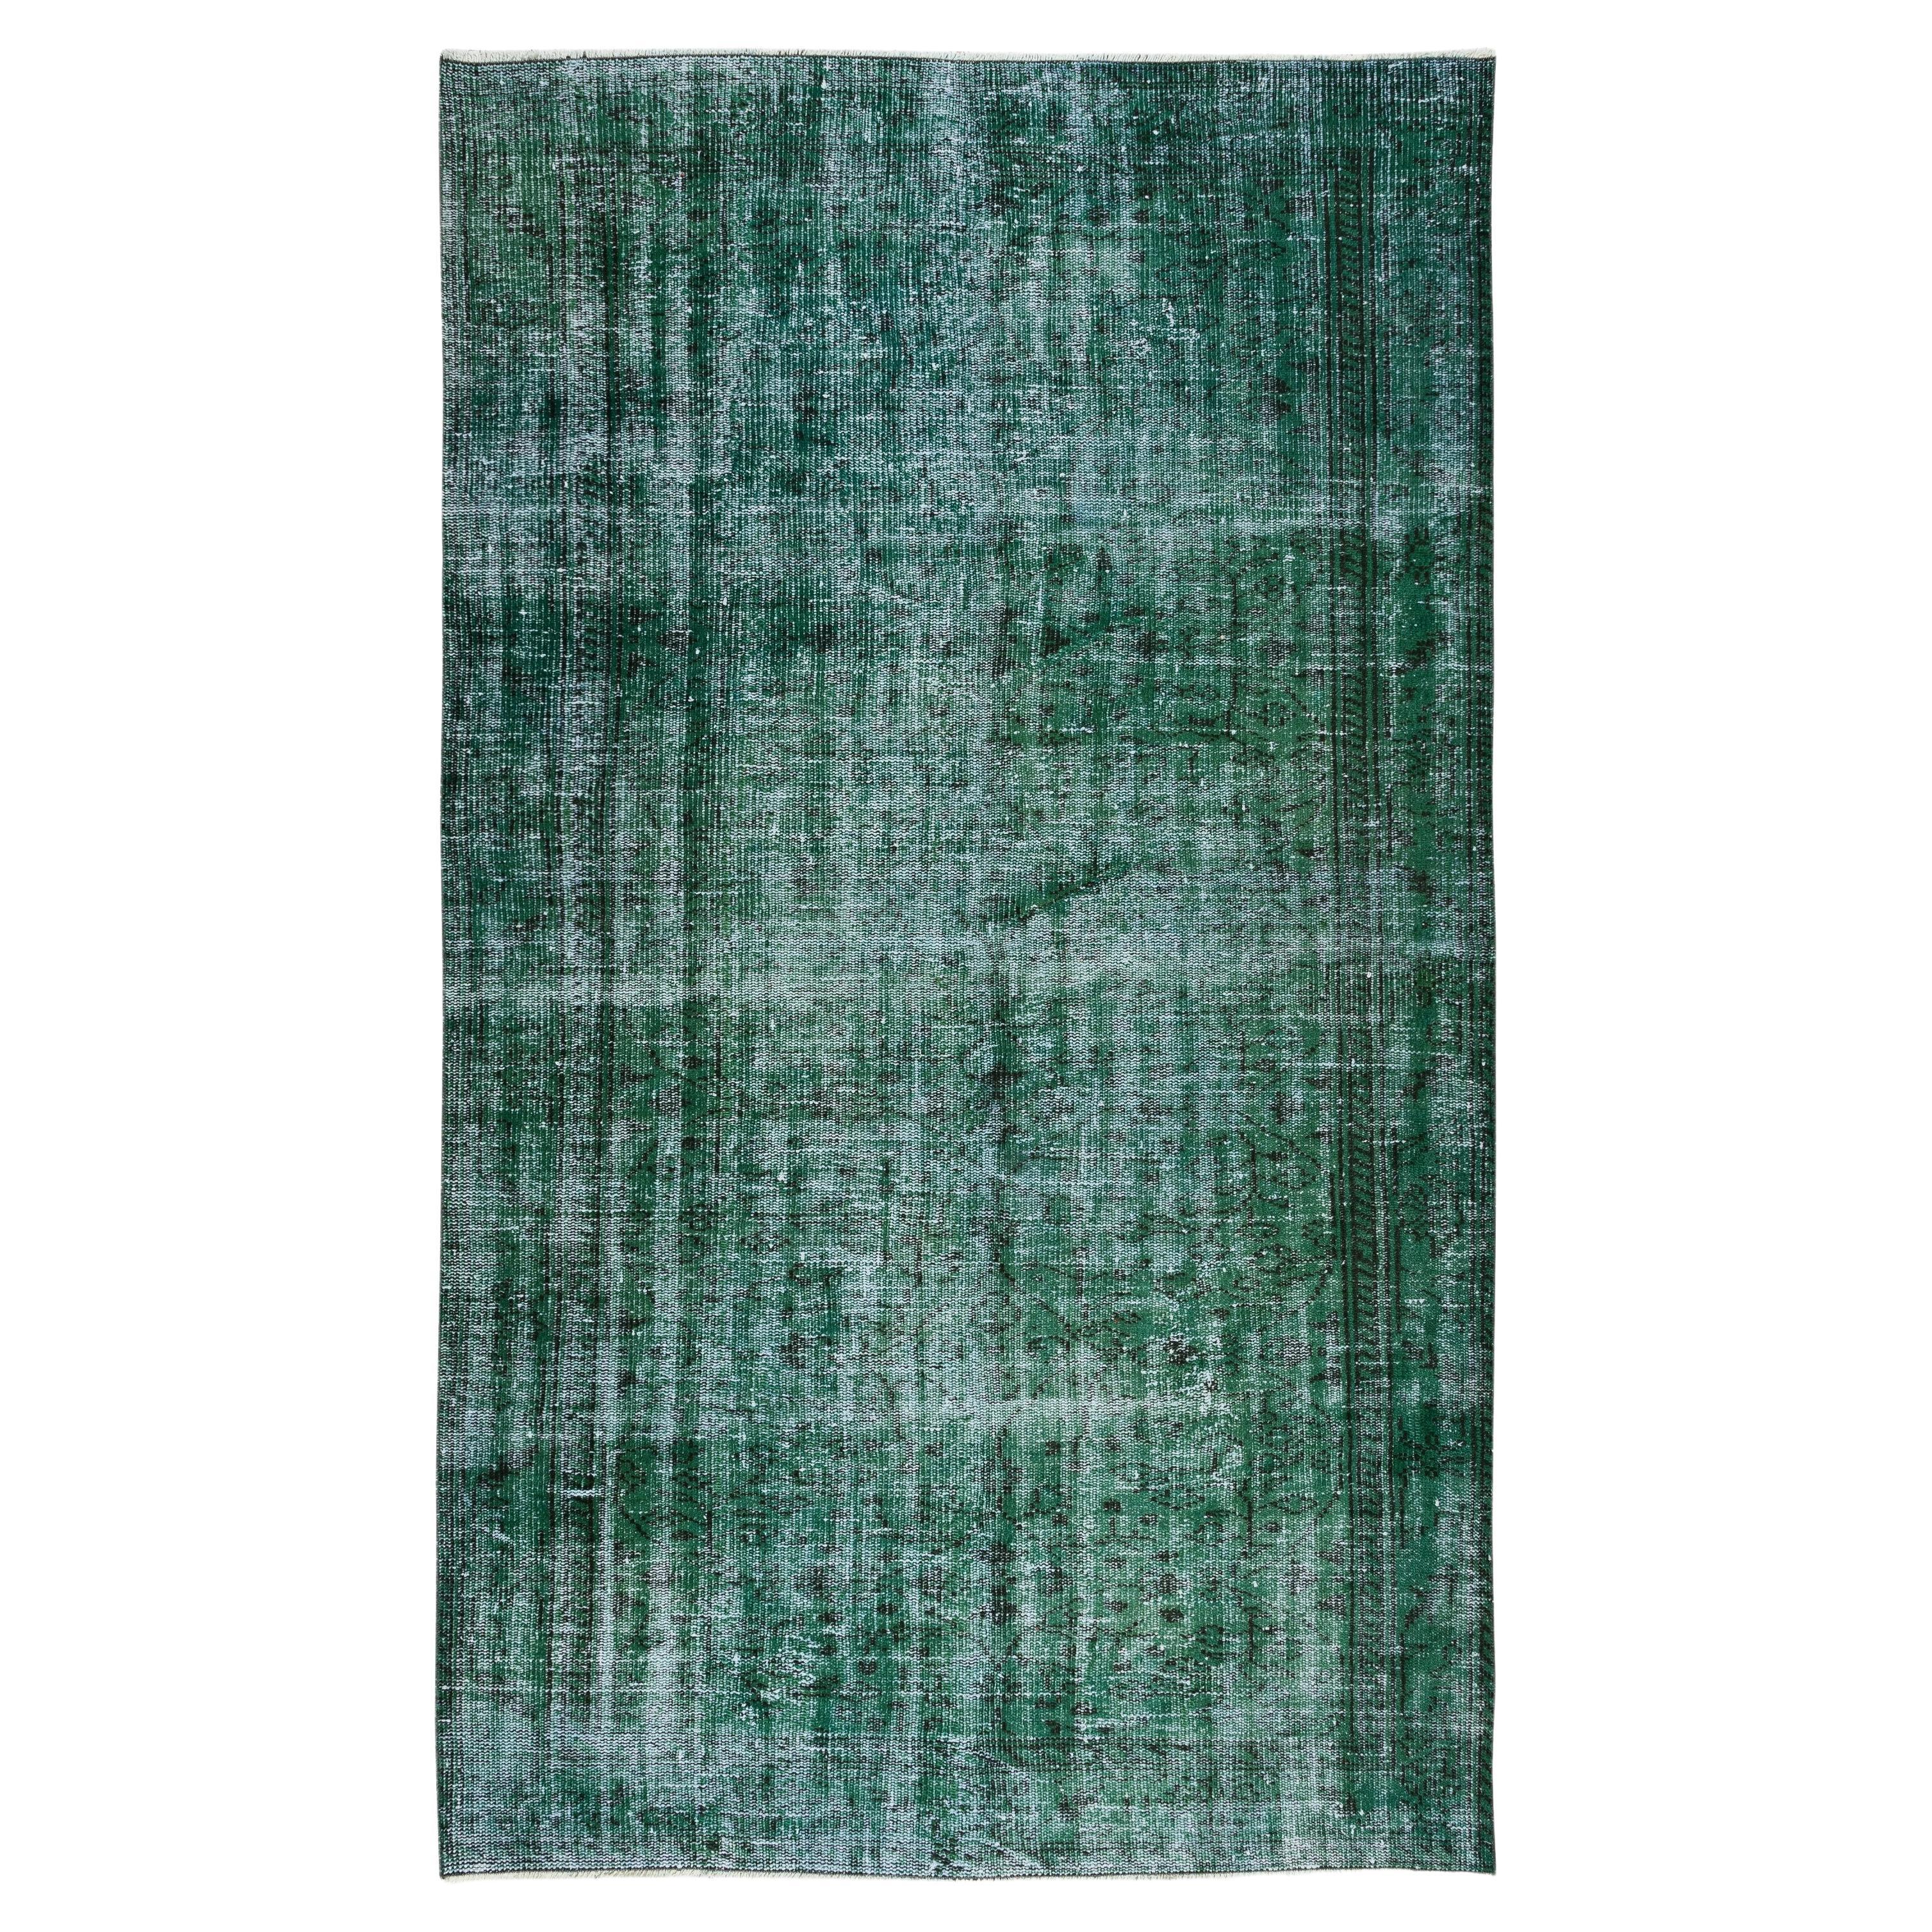 Green Floor Rug for Modern Interior, Handmade Turkish Vintage Wool Carpet